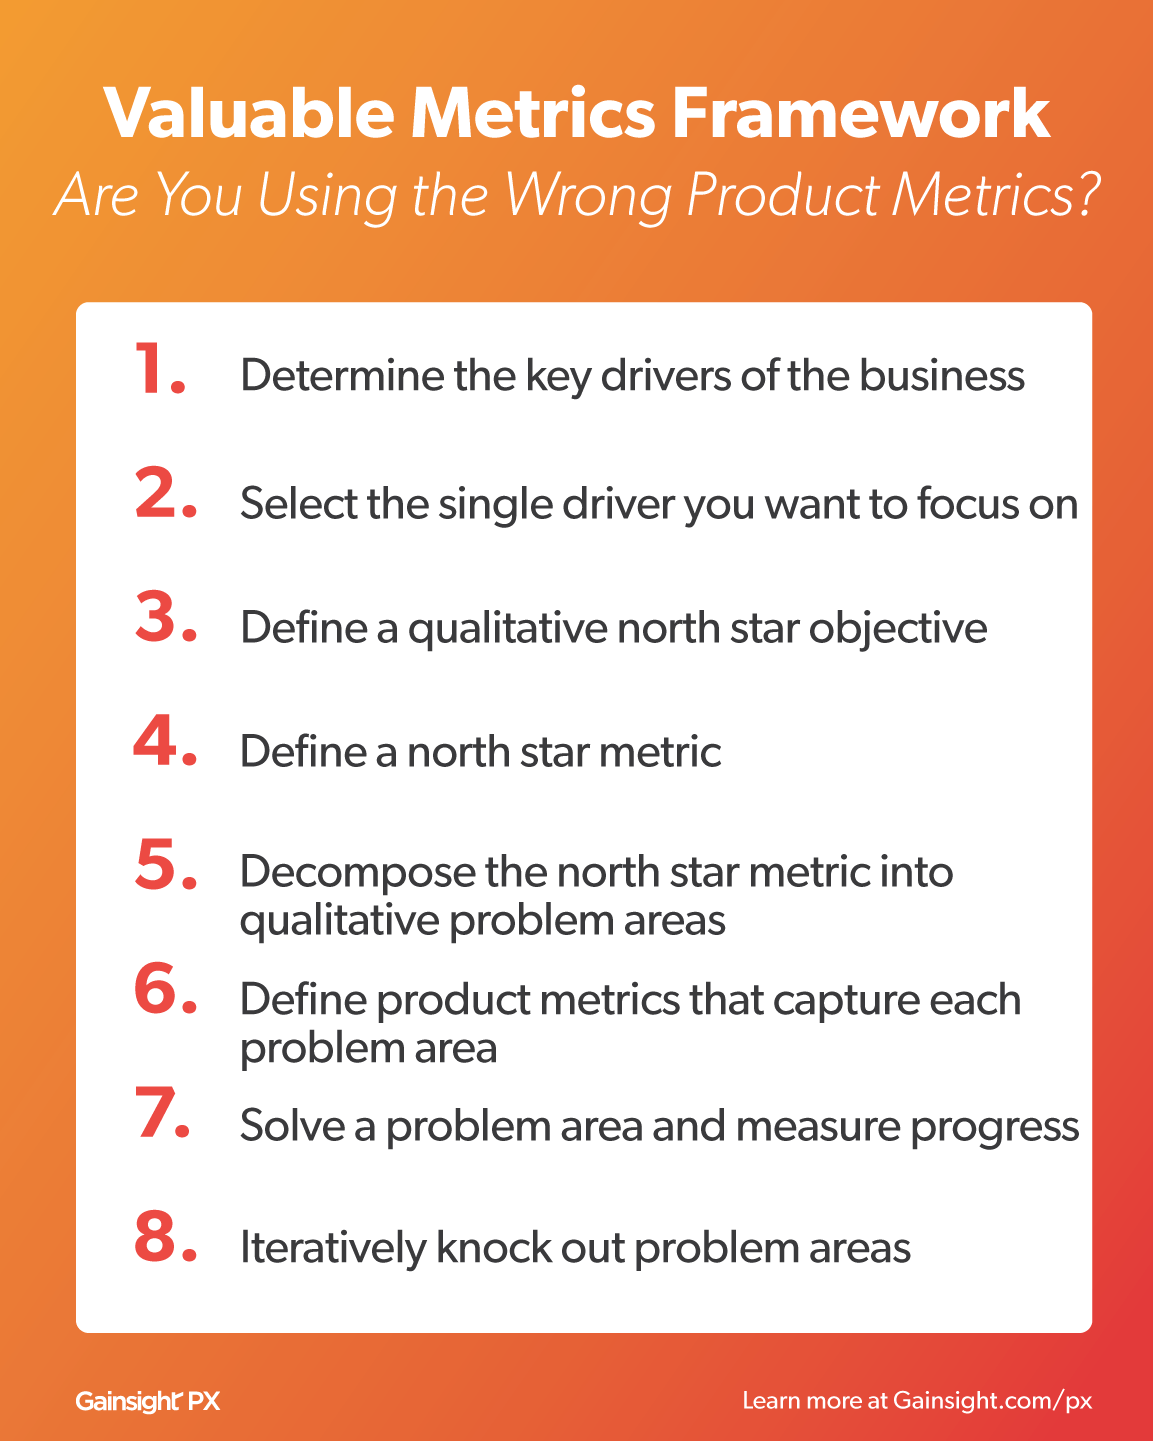 Valuable Metrics Framework Gainsight PX Product Analytics product experience tool 8